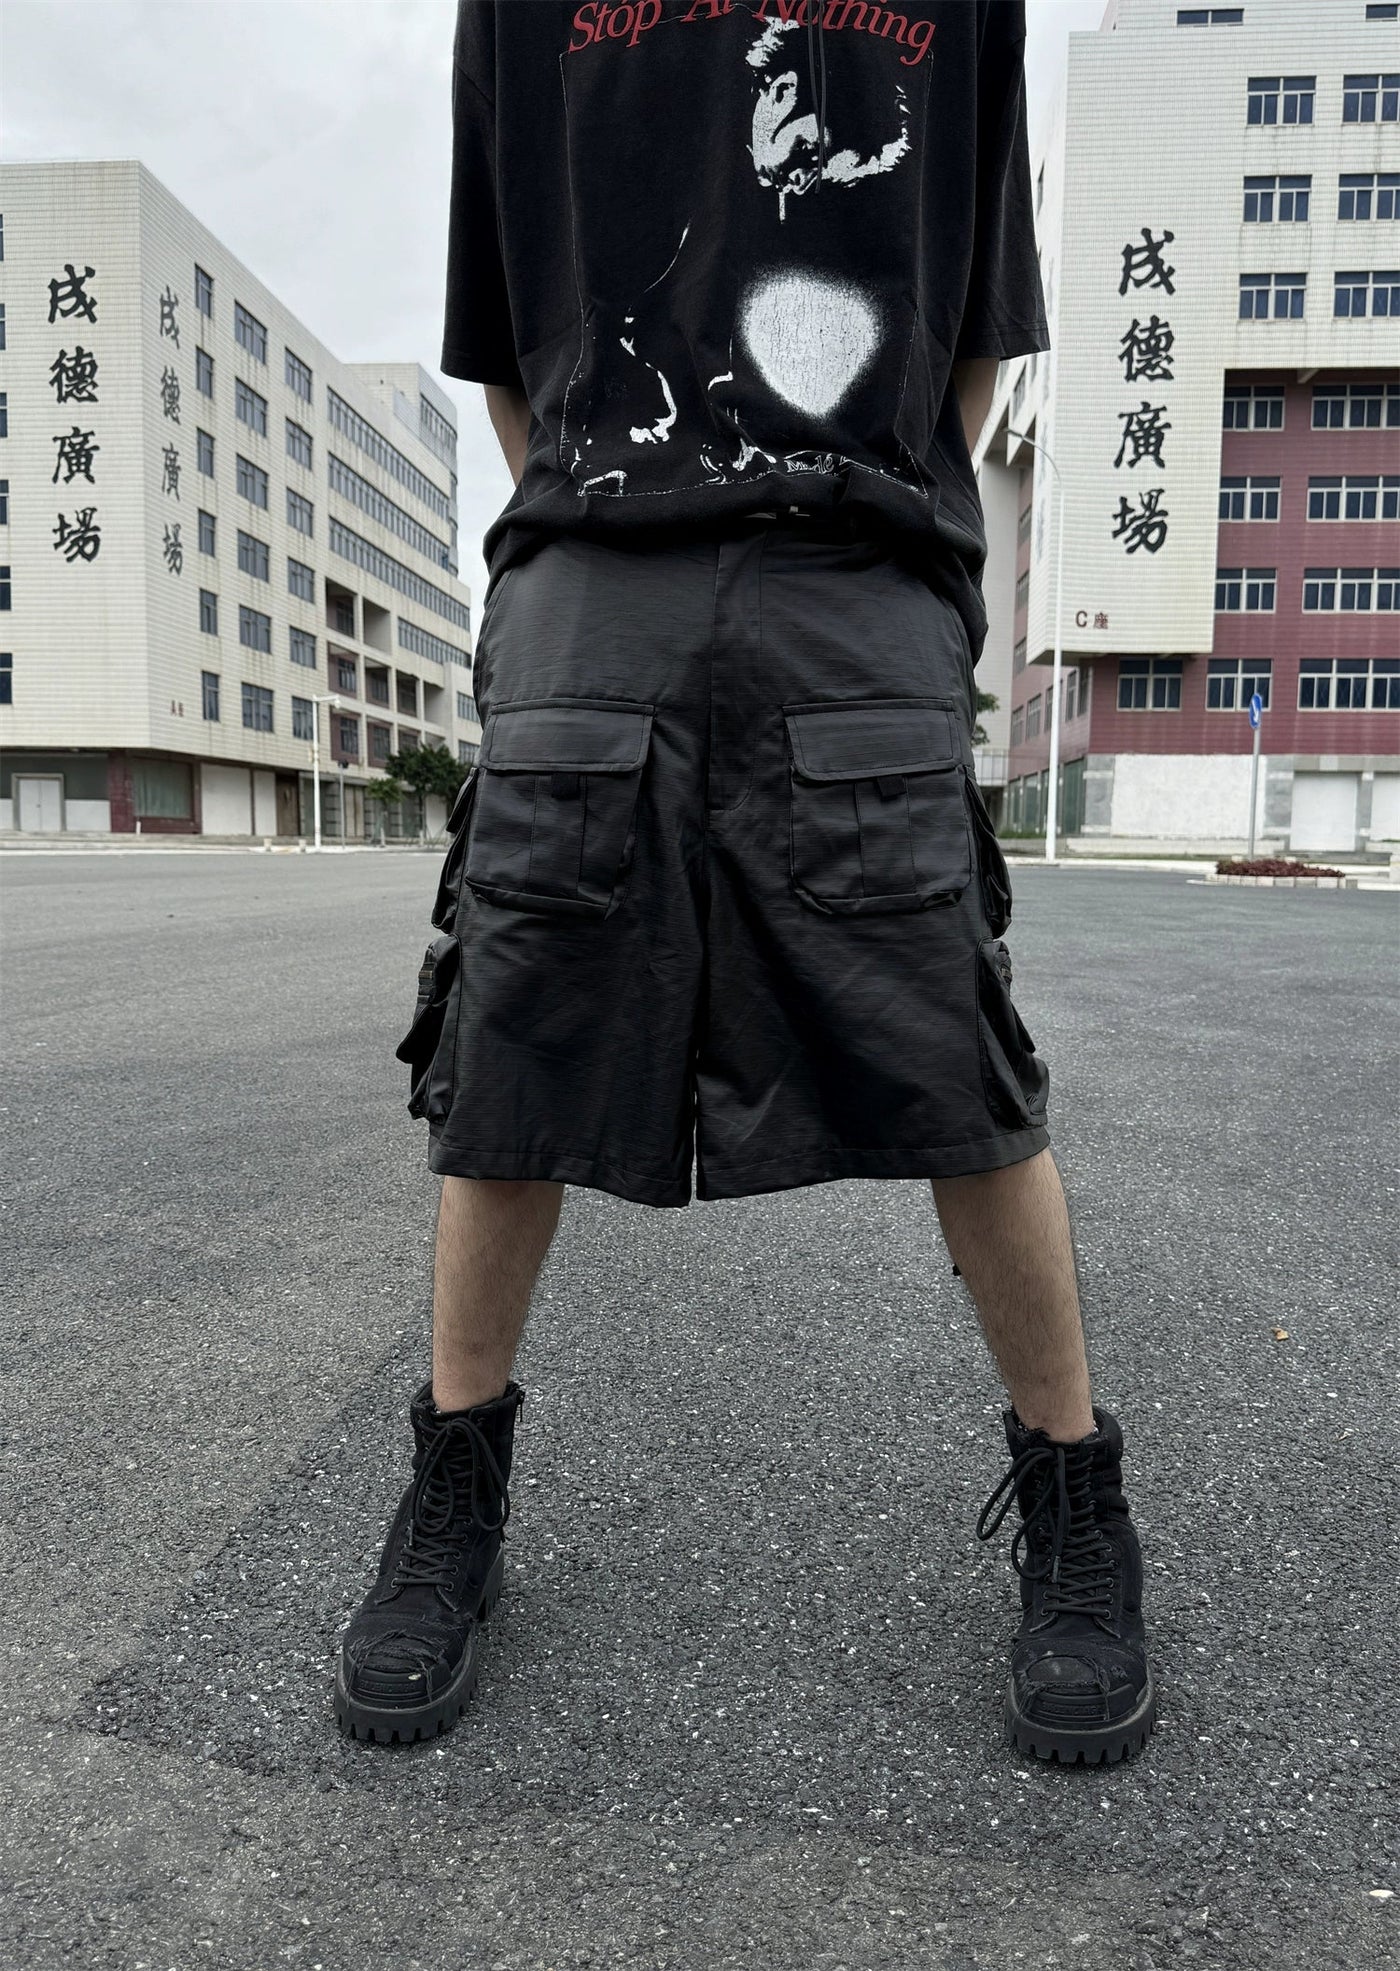 Functional Shiny Coated Cargo Shorts Korean Street Fashion Shorts By Ash Dark Shop Online at OH Vault